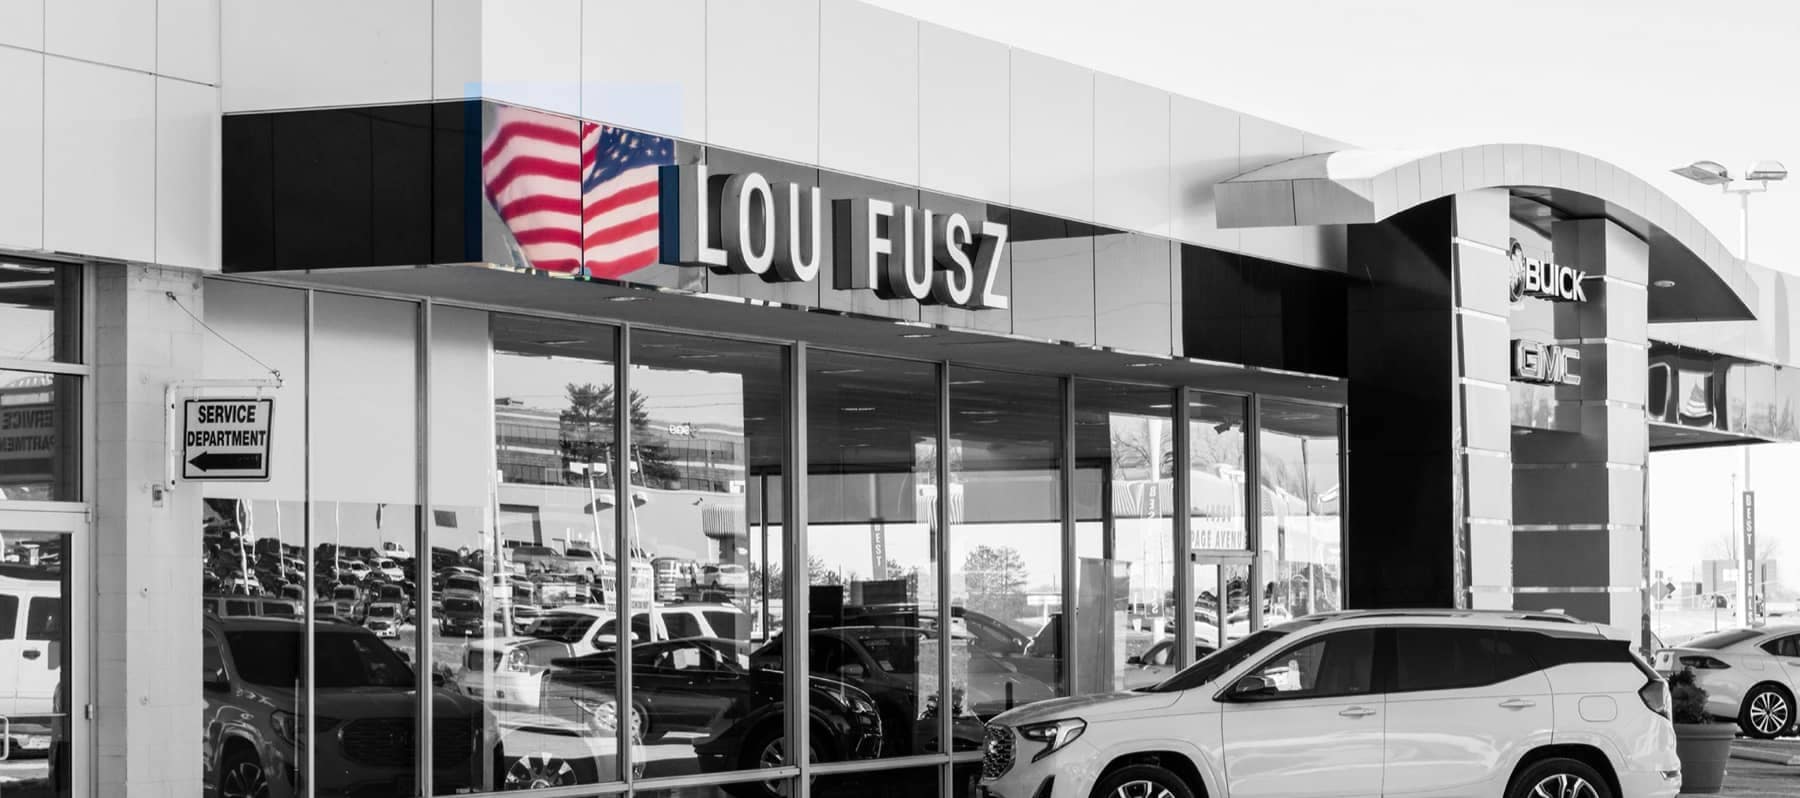 Lou Fusz dealership exterior